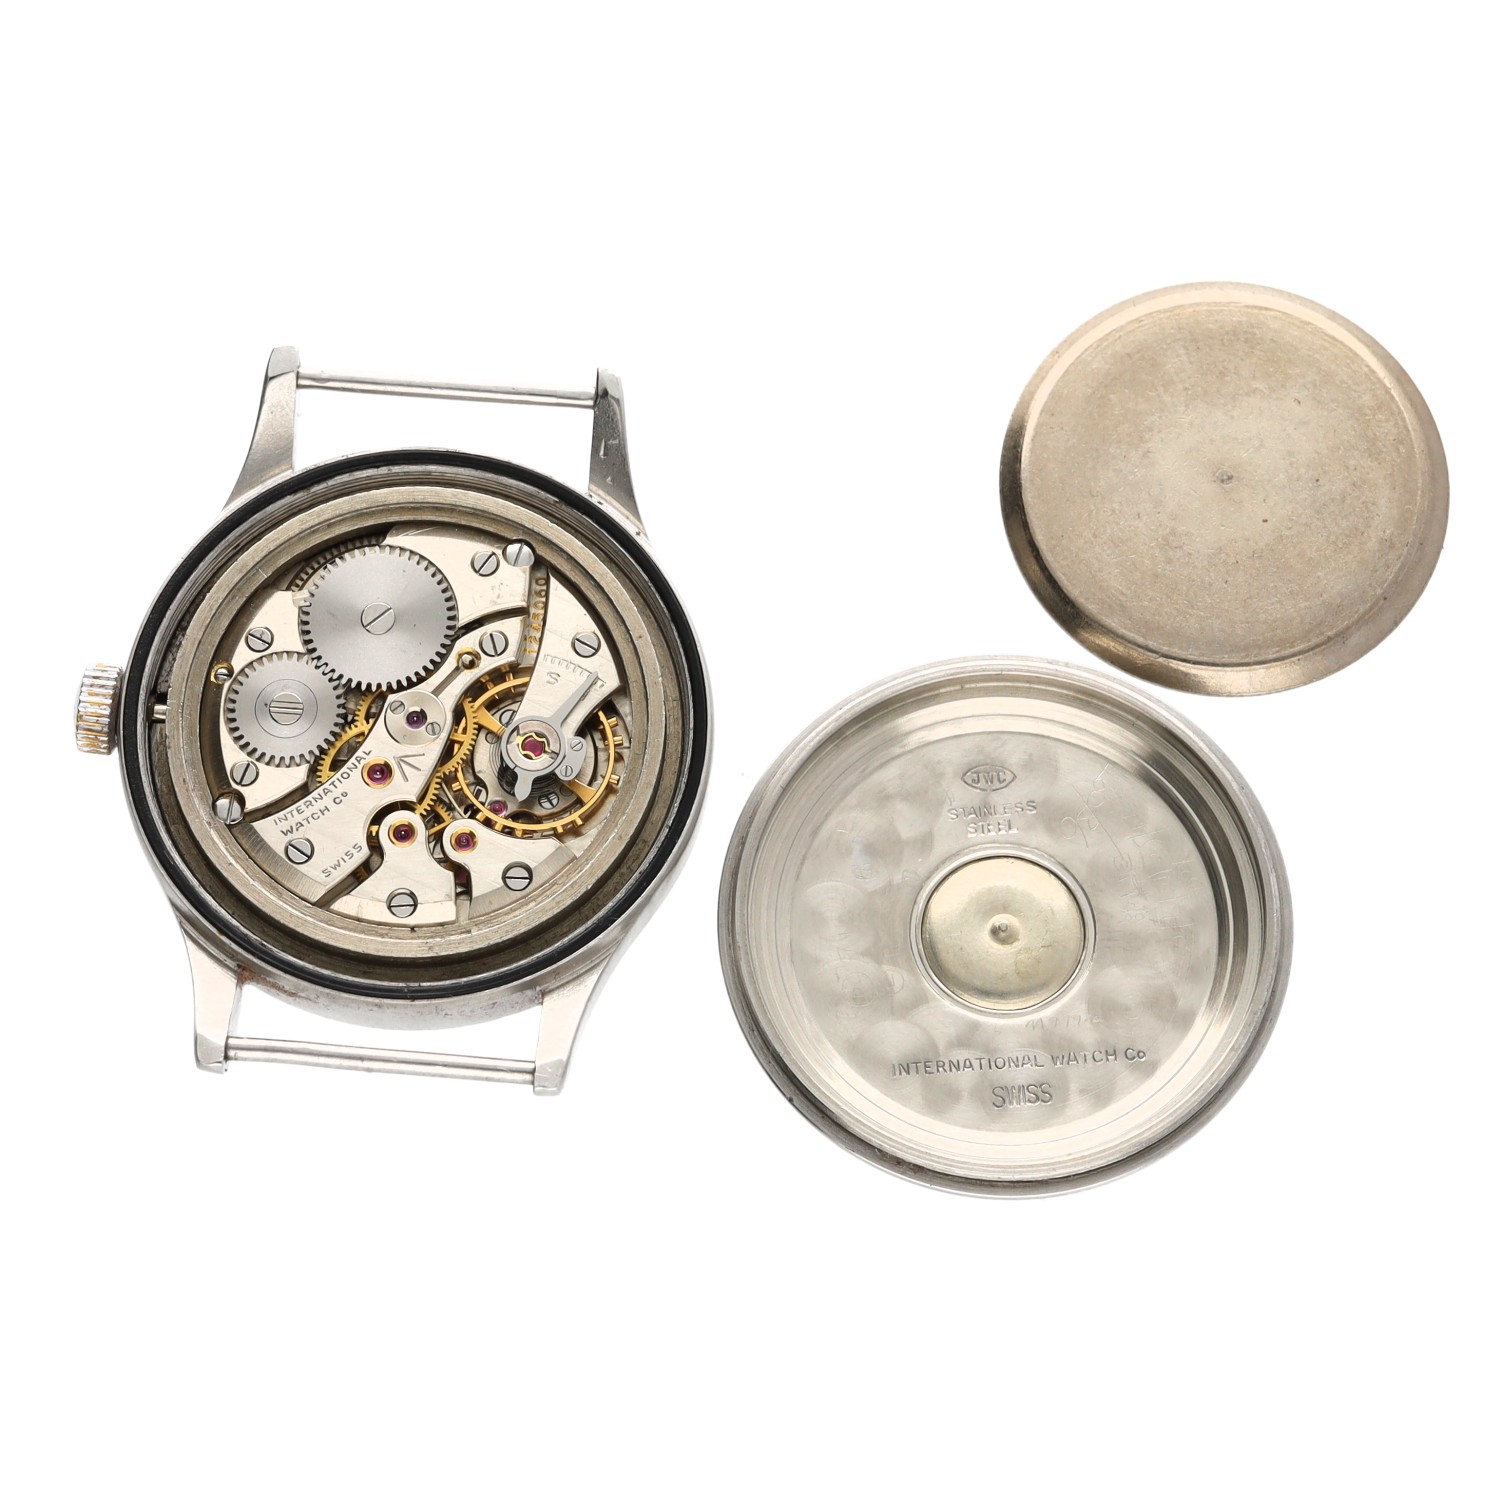 International Watch Co. (IWC) Mark 11 British Military RAF pilot's stainless steel wristwatch, circa - Image 3 of 3